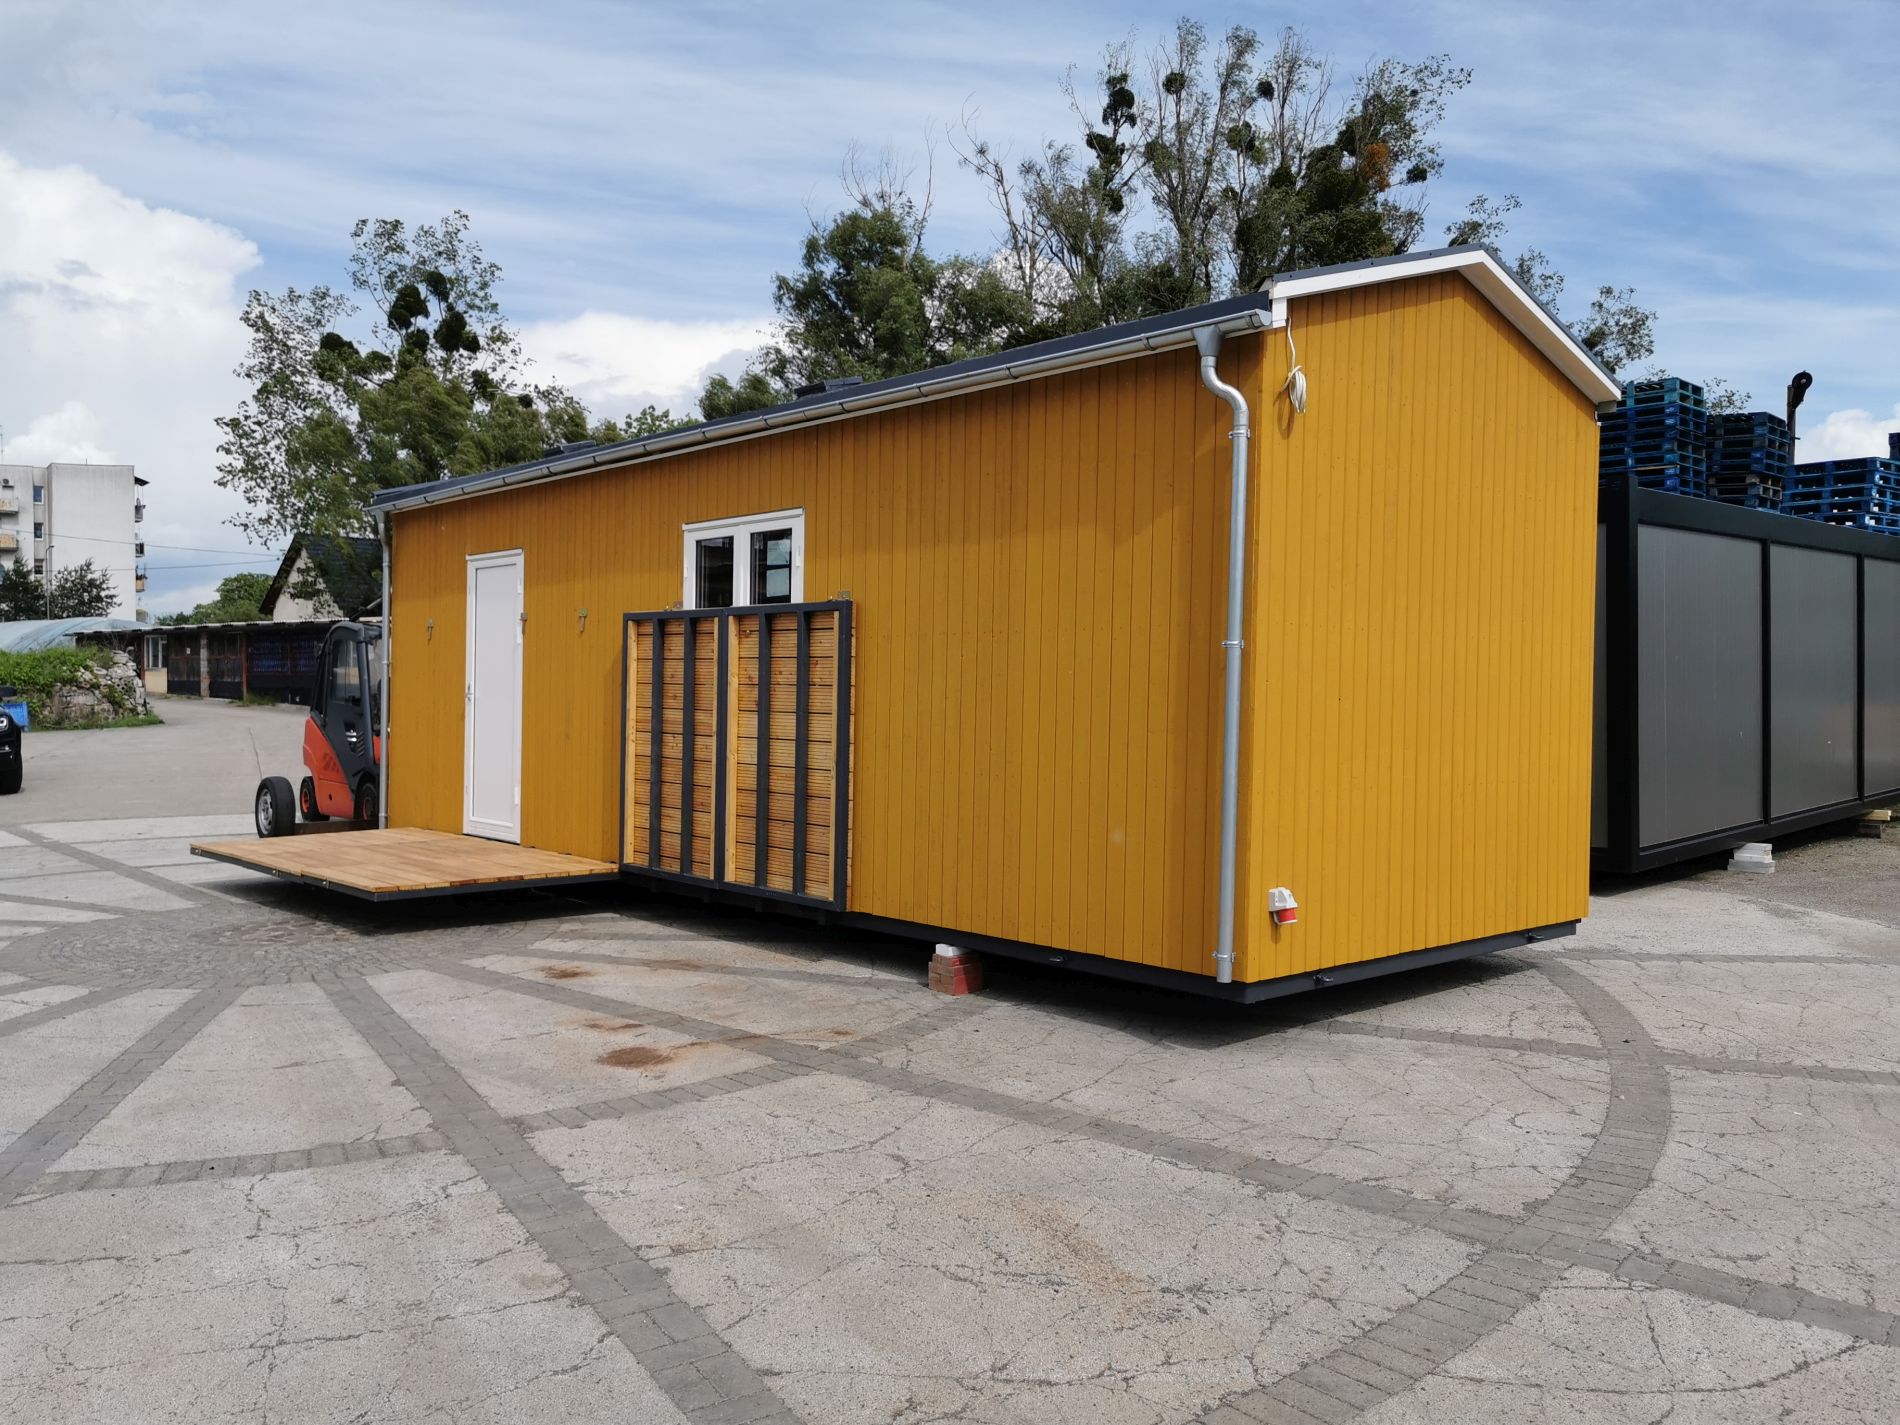 Simplest modular house